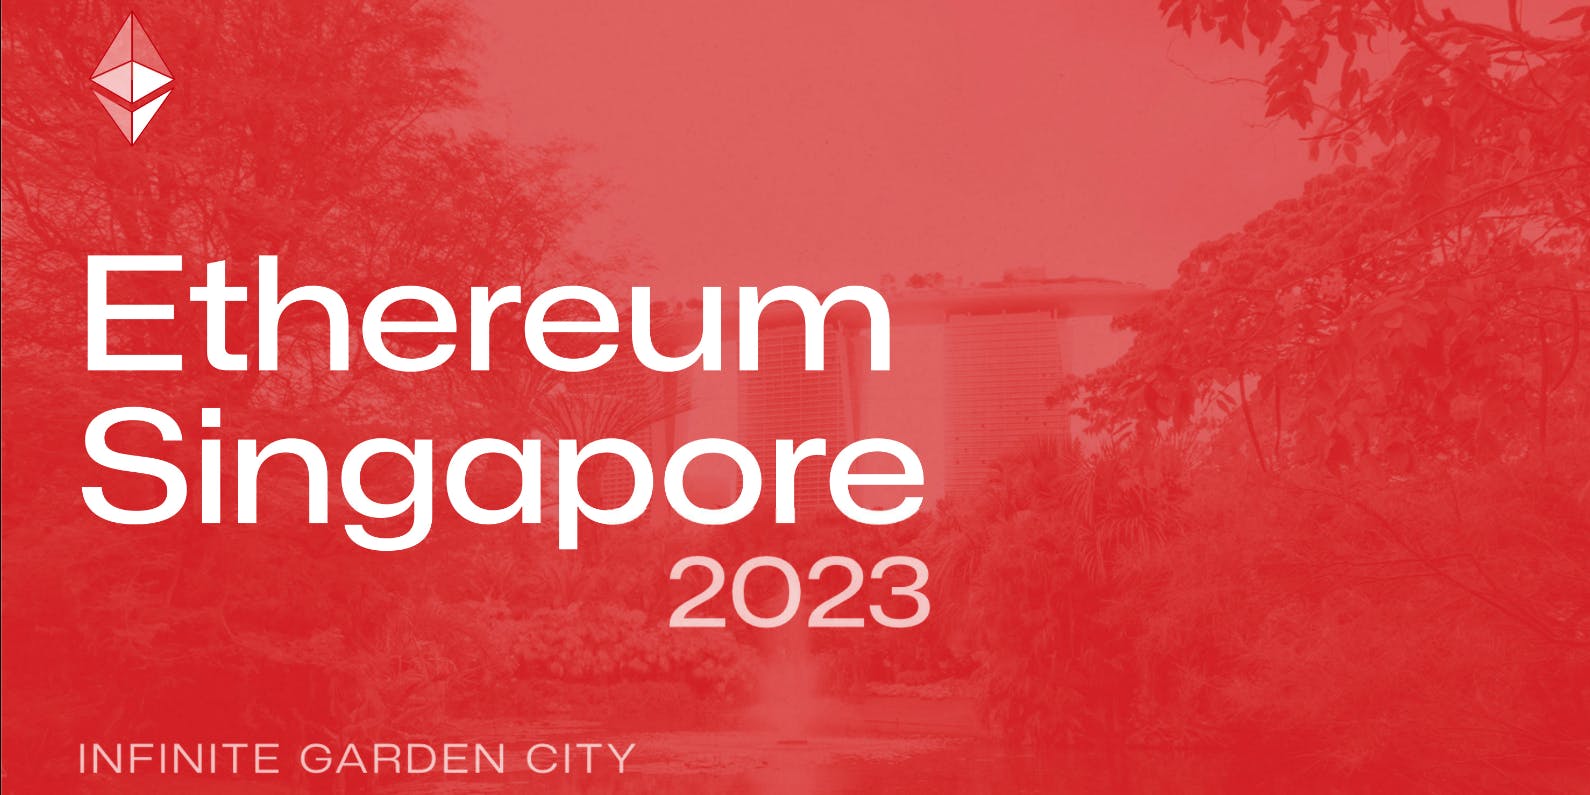 Ethereum Singapore 2023将为2000多名Web3开发者、人才与当地生态系统搭建沟通桥梁